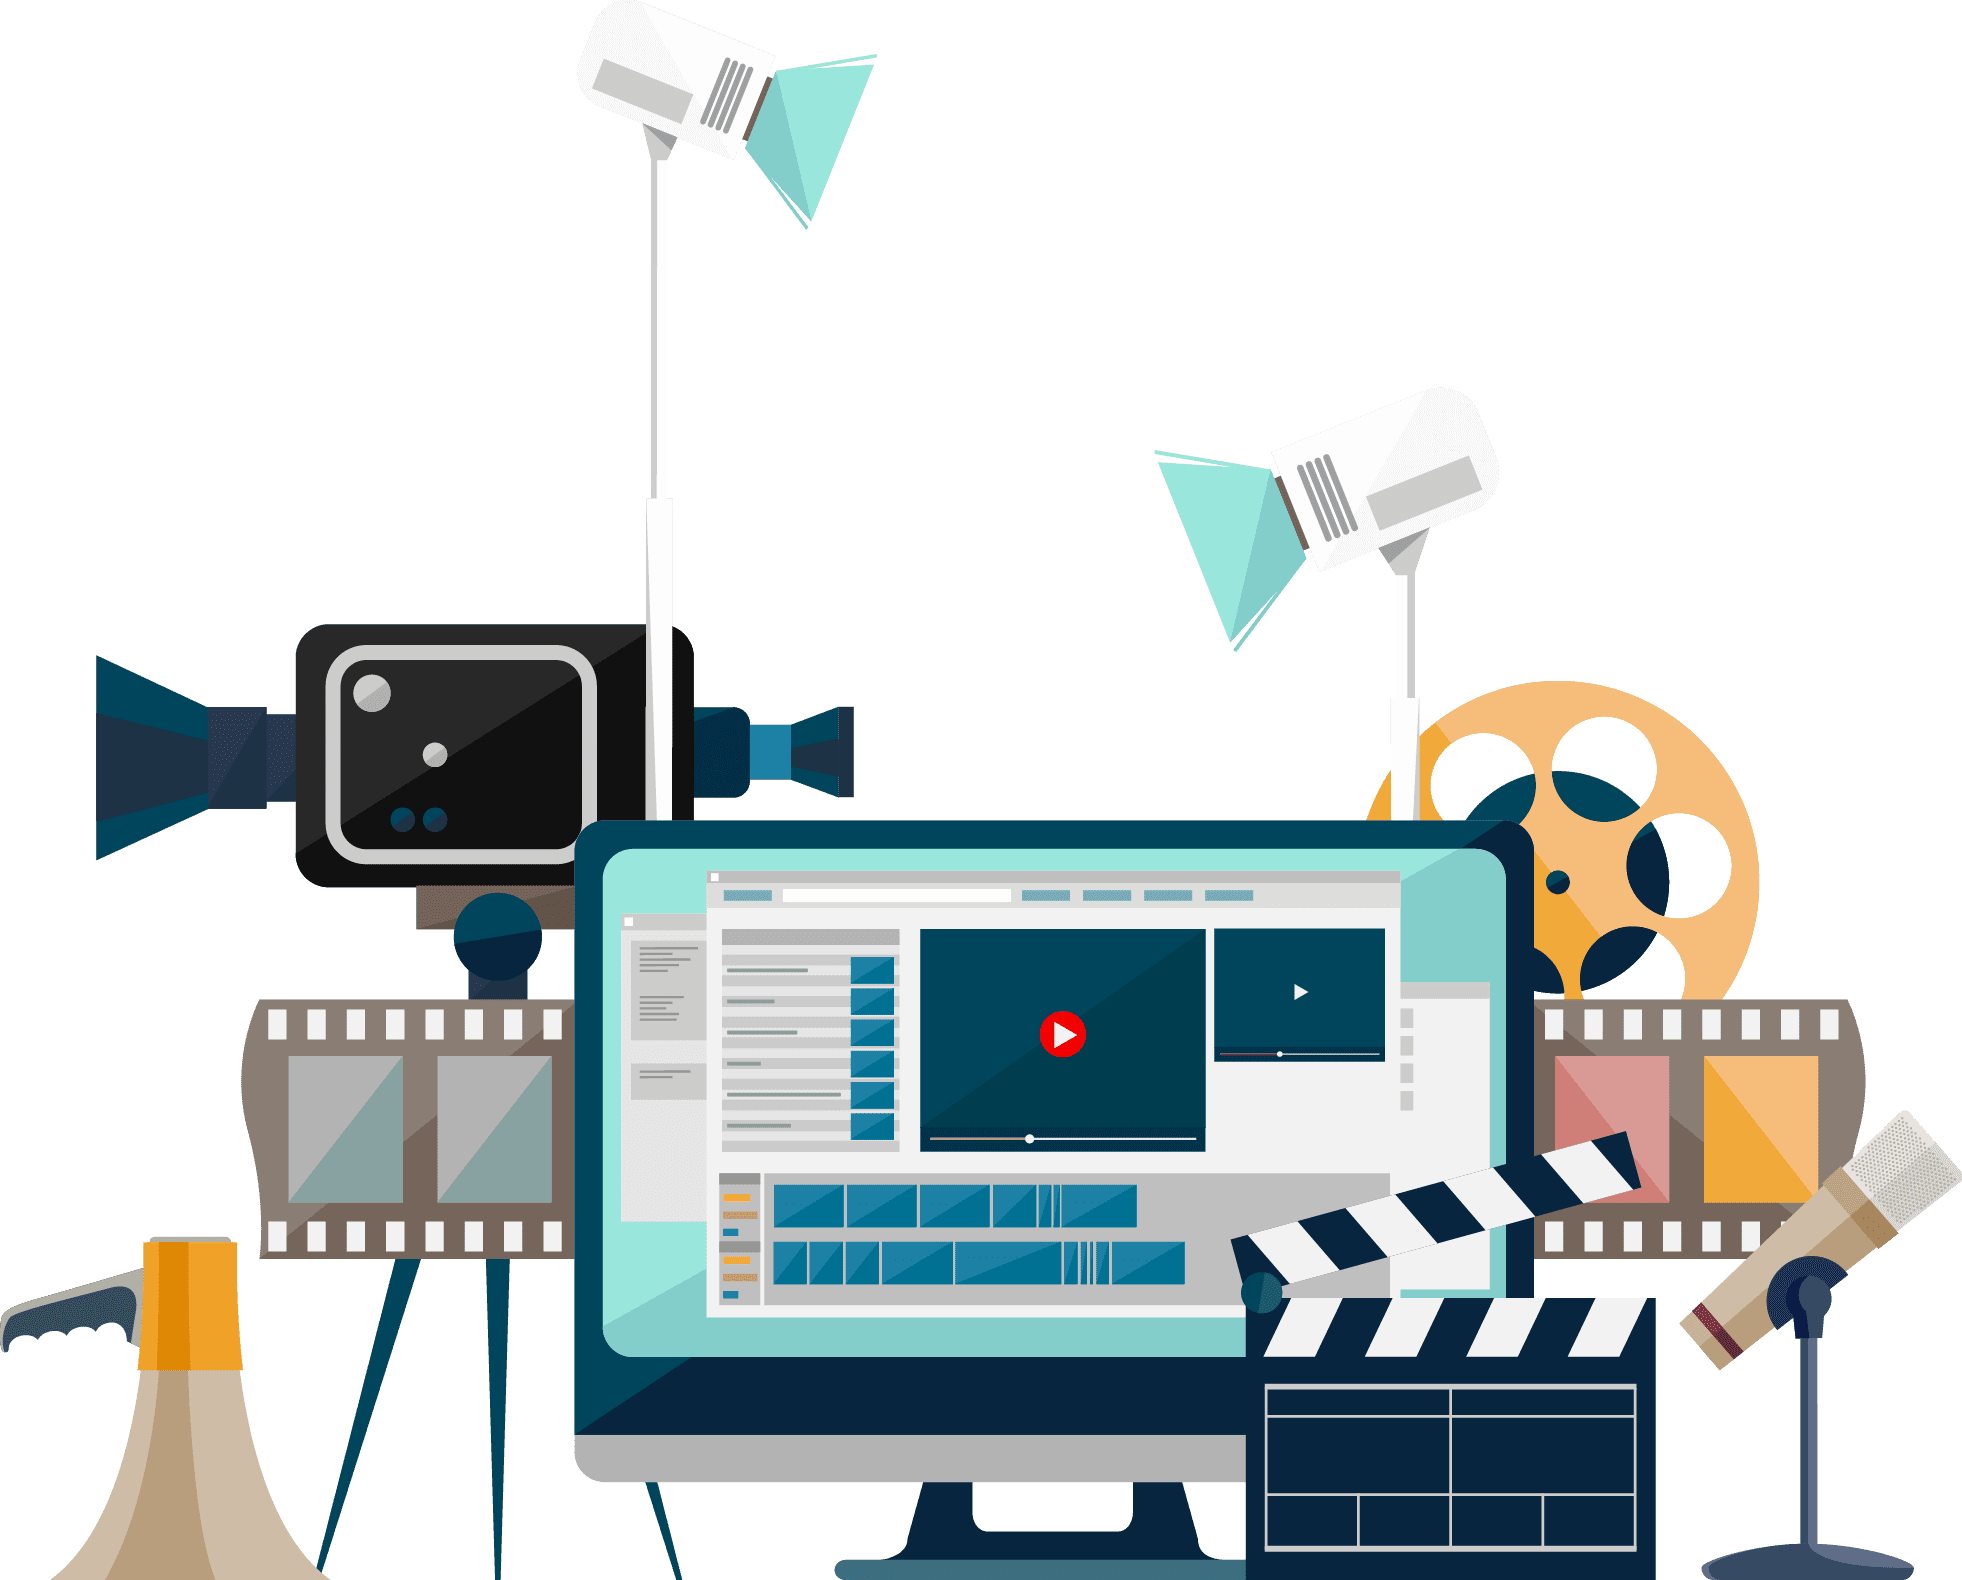 Video Production Marketing